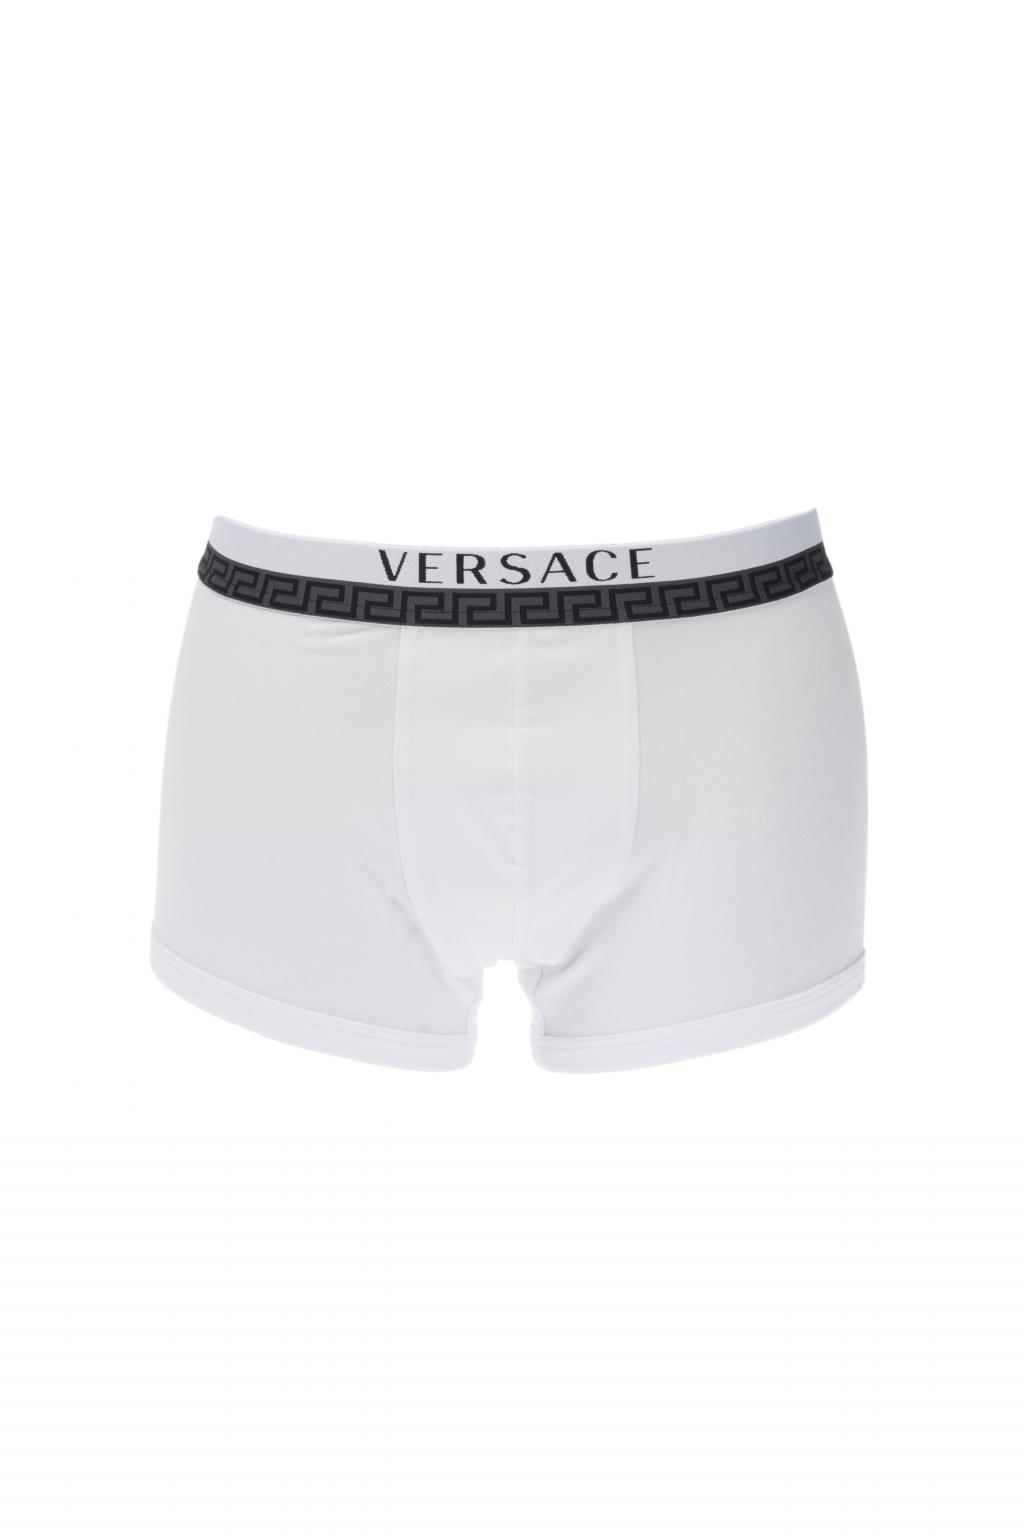 Versace Boxers Three-Pack | Men's Clothing | Vitkac